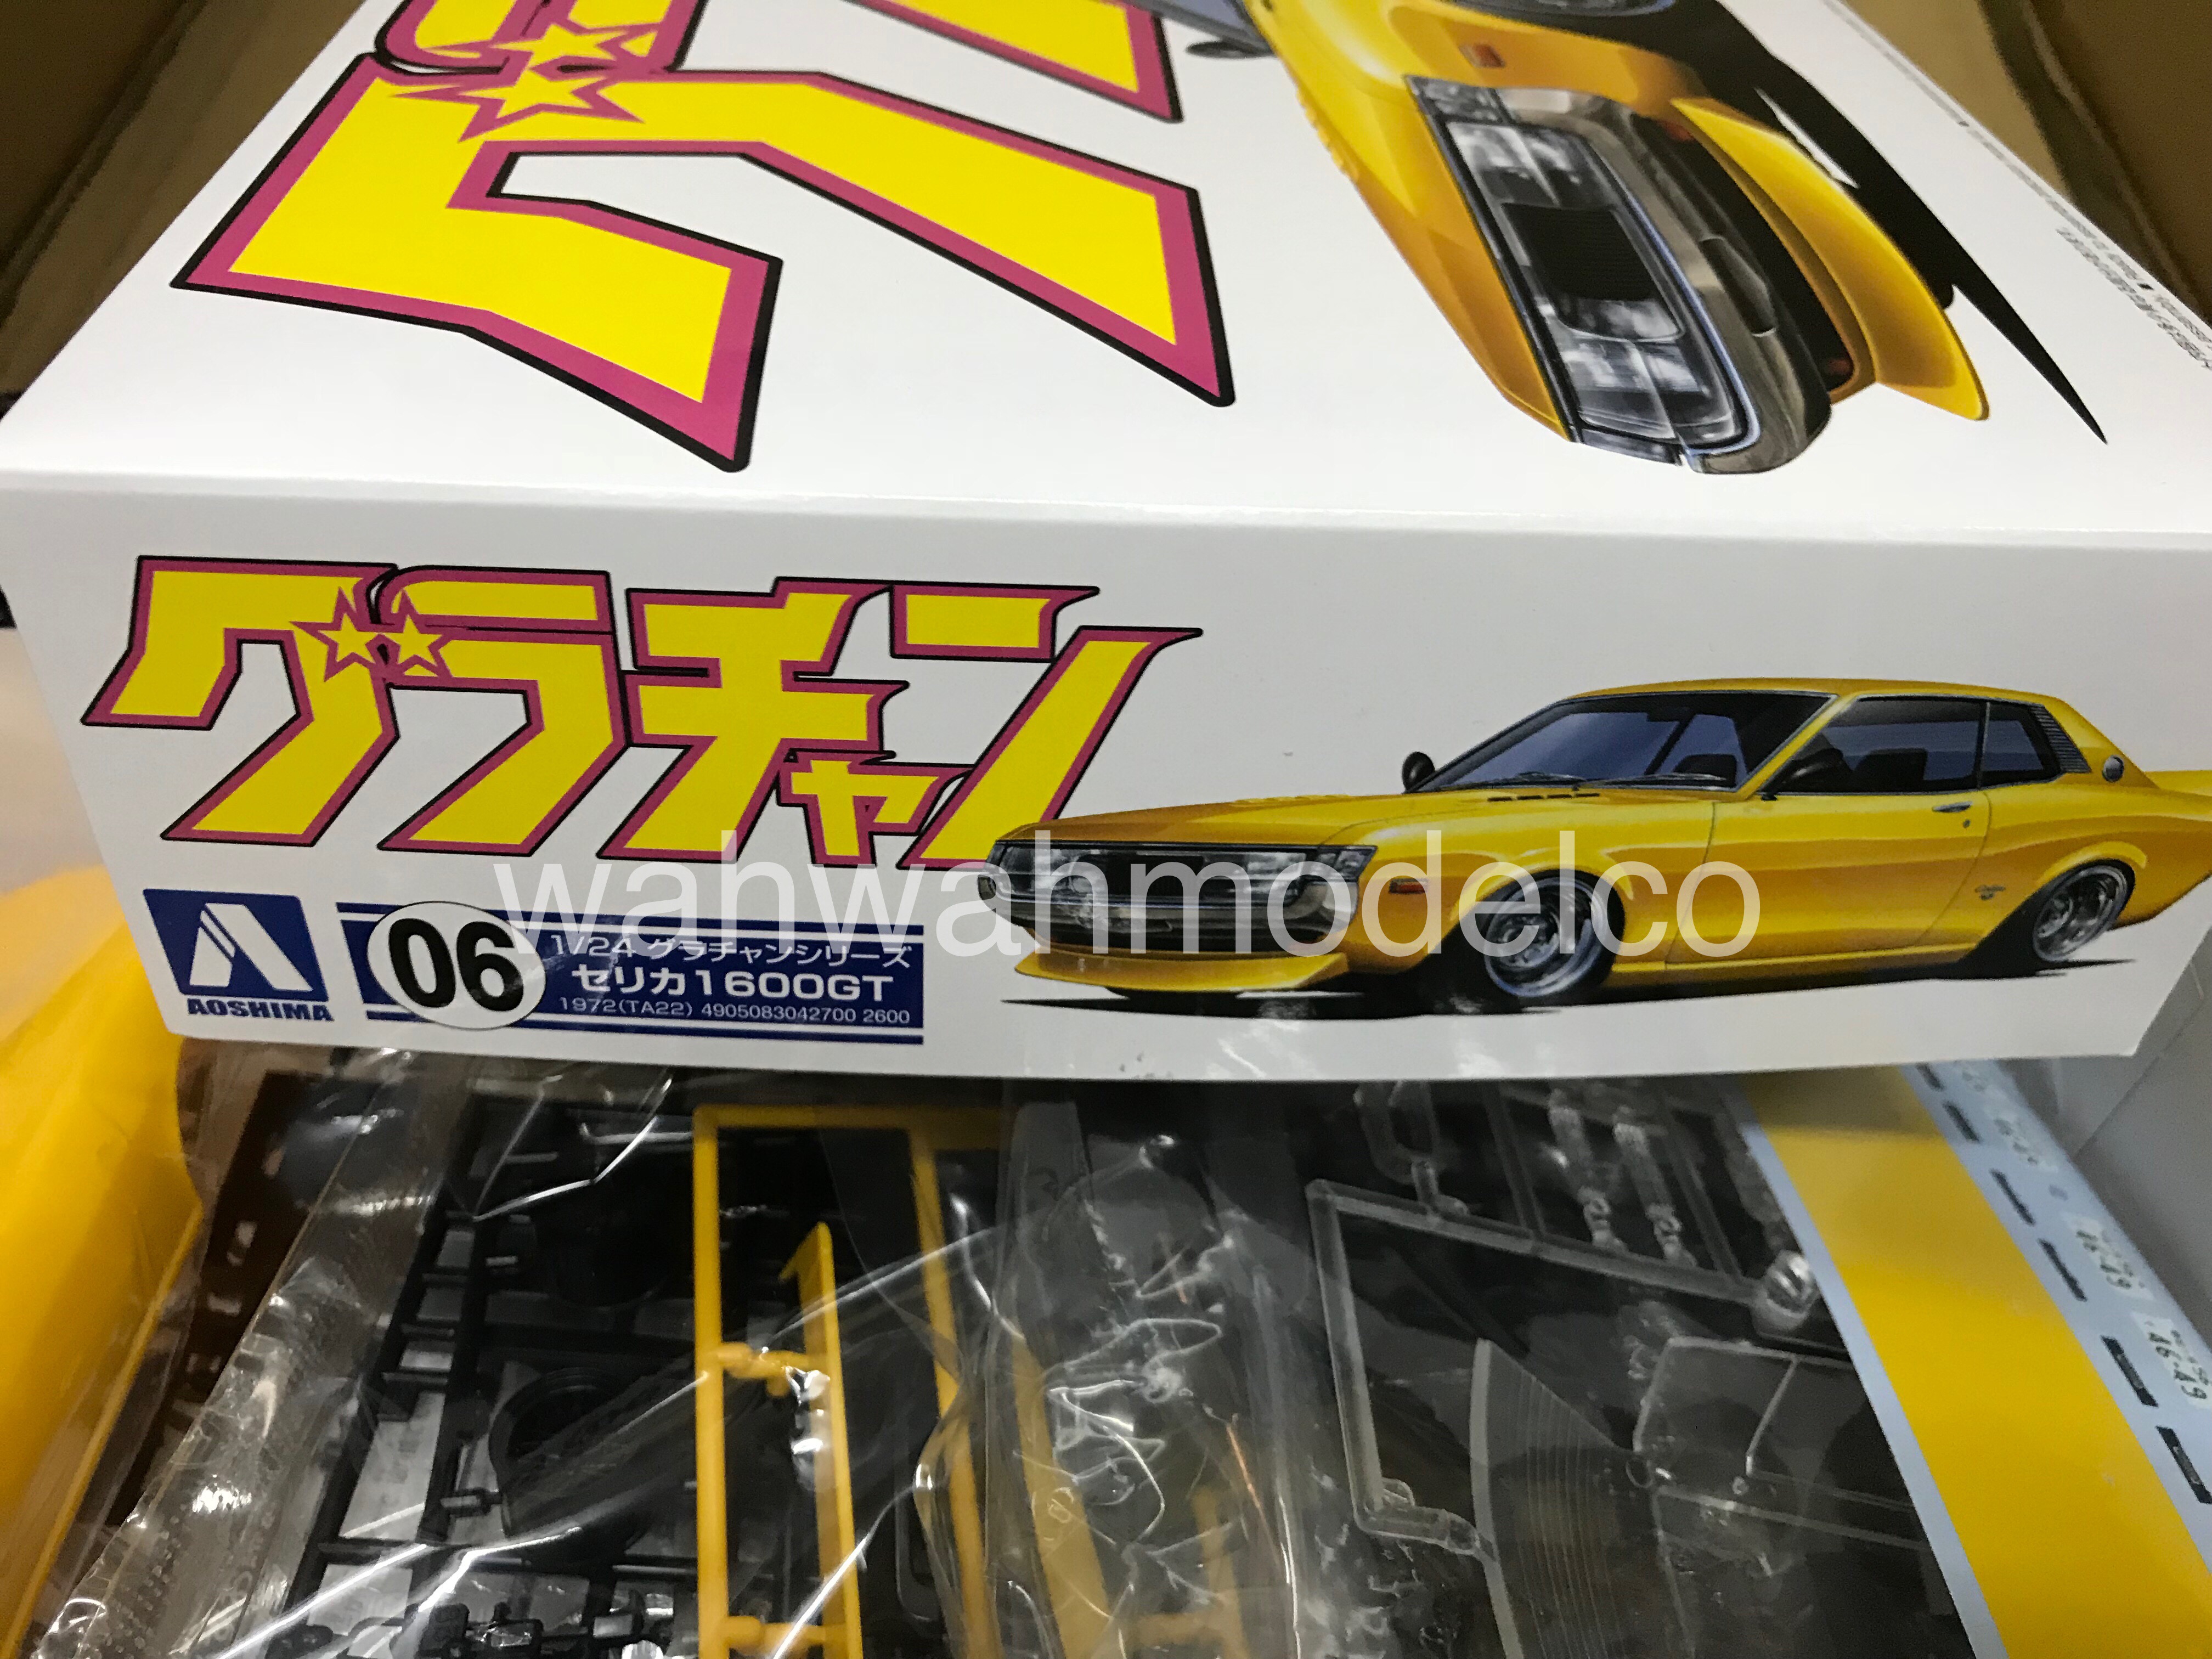 Aoshima Celica 1600gt Toyota 1 24 Scale Kit